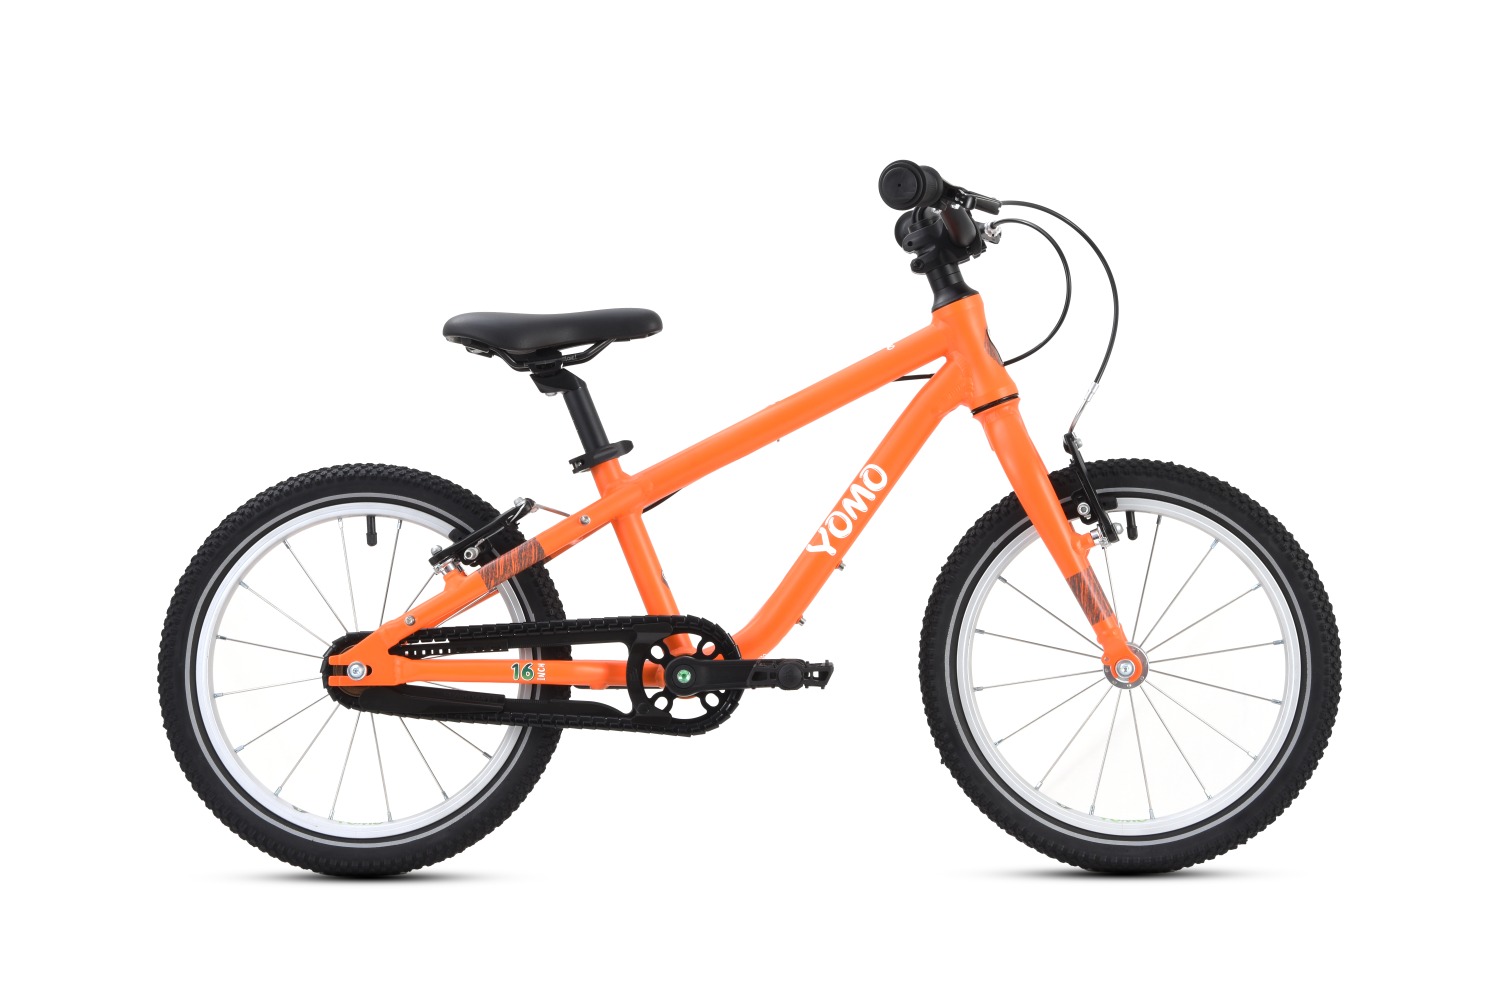 Best 16" kids' bikes: in orange - the YOMO 16